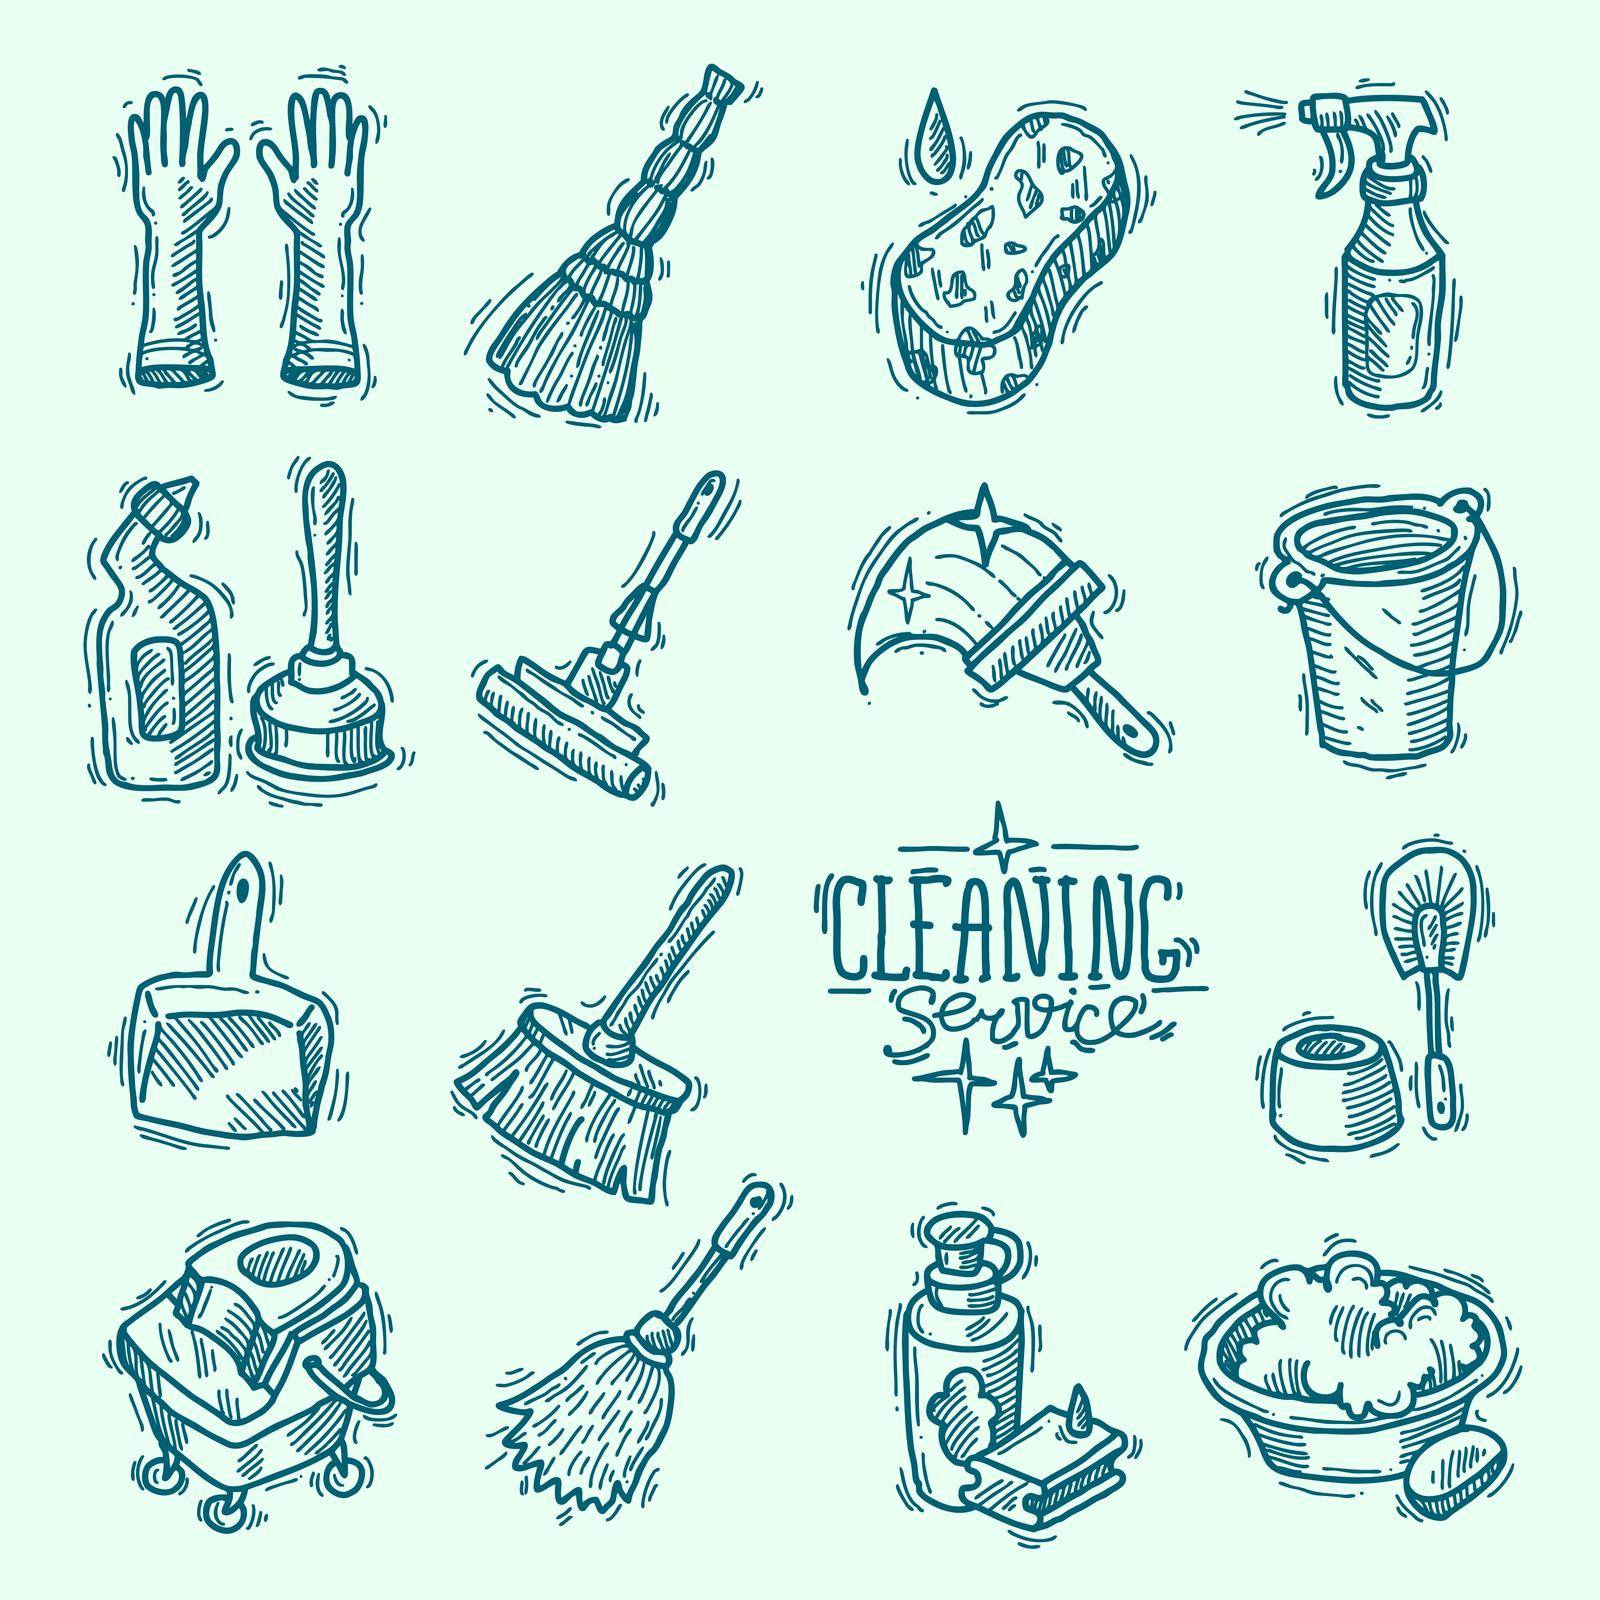 cleaning service by steshnikova